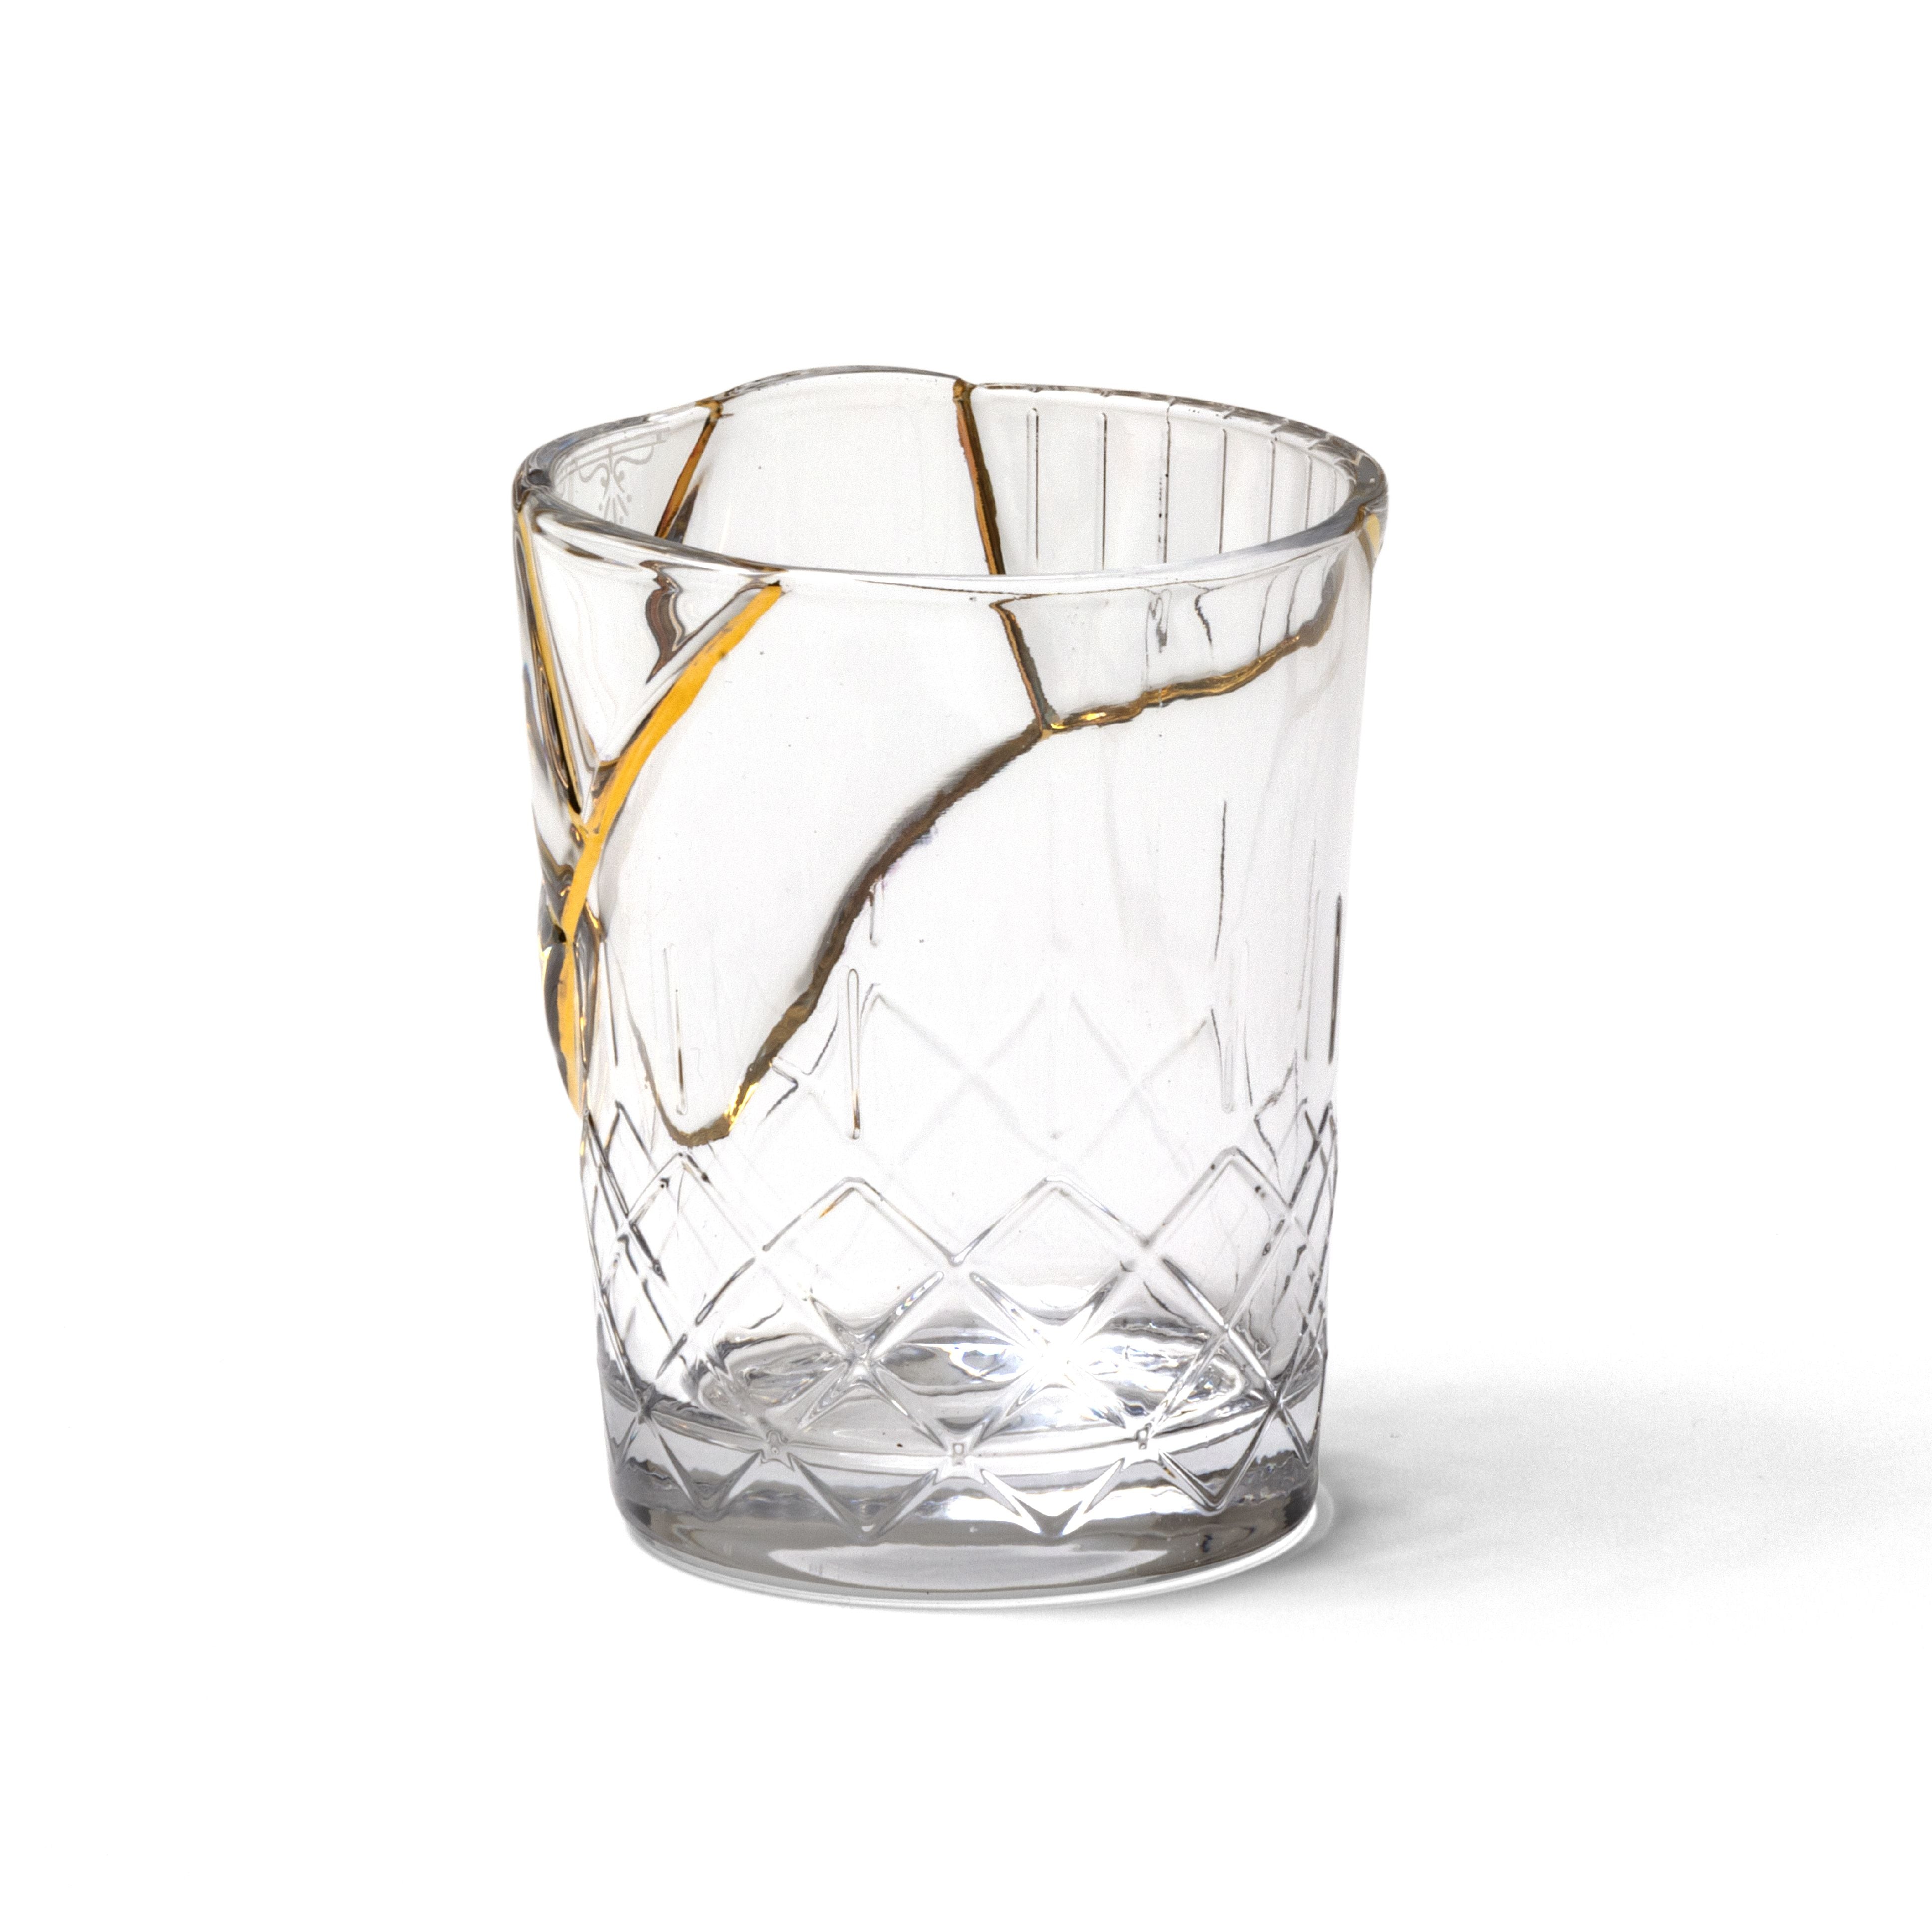 Seletti Kintsugi Glass, n. 1